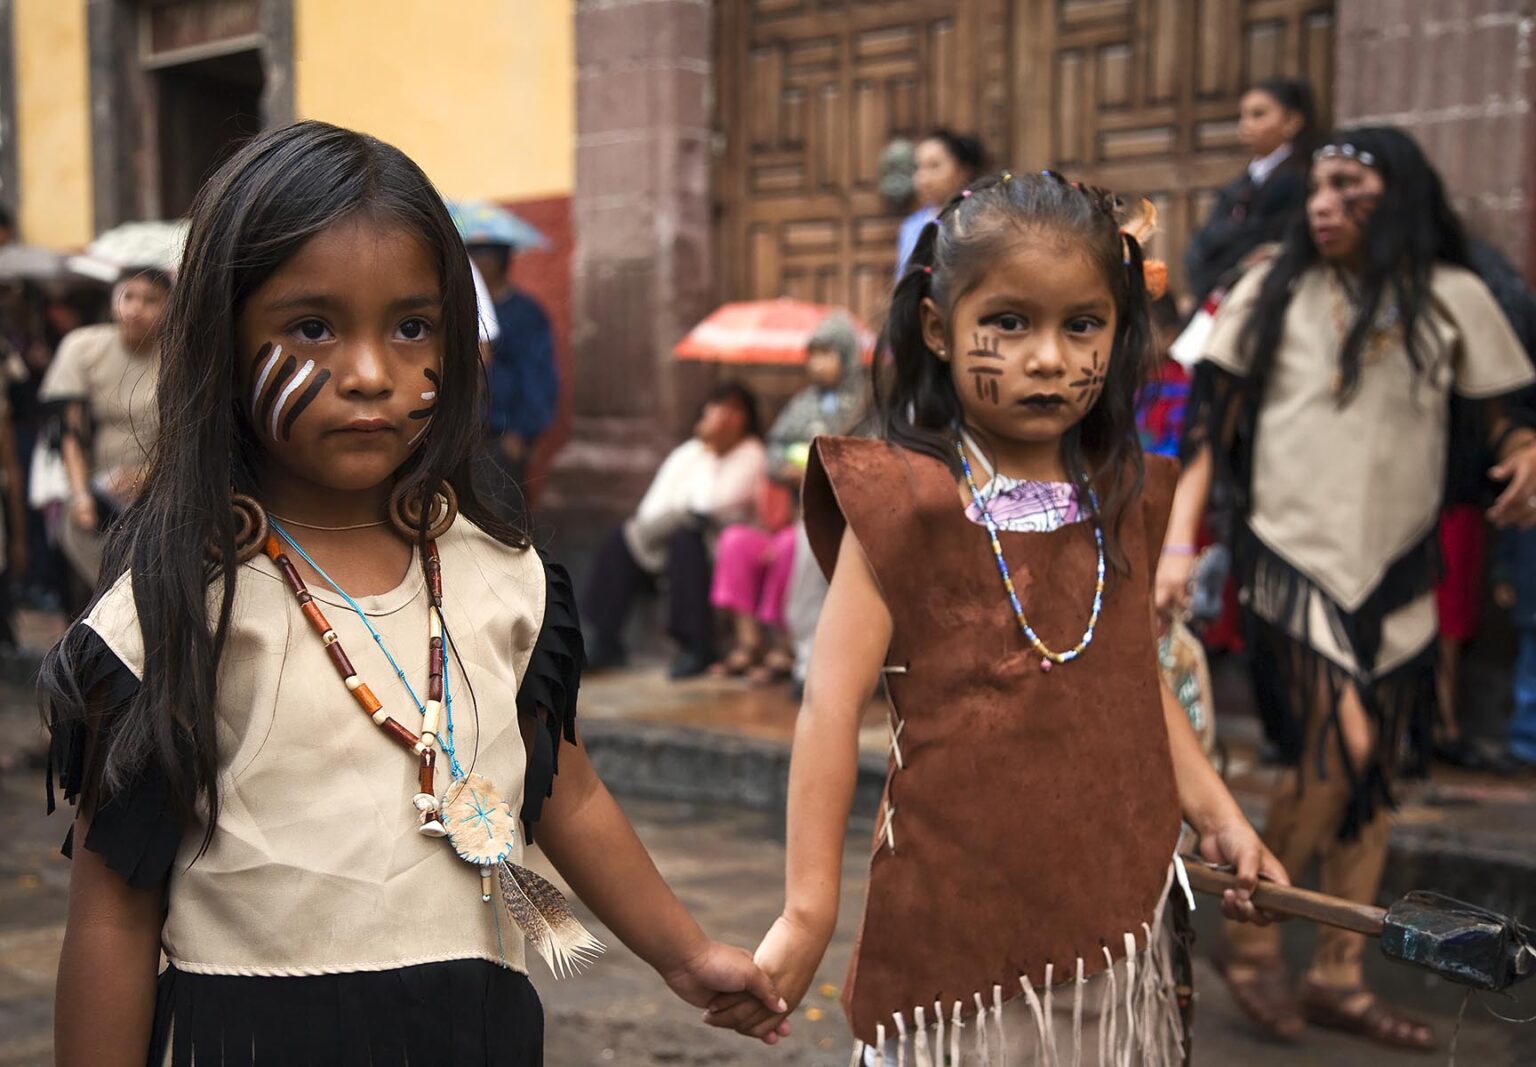 MEXICAN GIRLS in AZTEC INDIAN COSTUMES honor their heritage in the FESTIVAL DE SAN MIGUEL ARCHANGEL PARADE - SAN MIGUEL DE ALLENDE, MEXICO